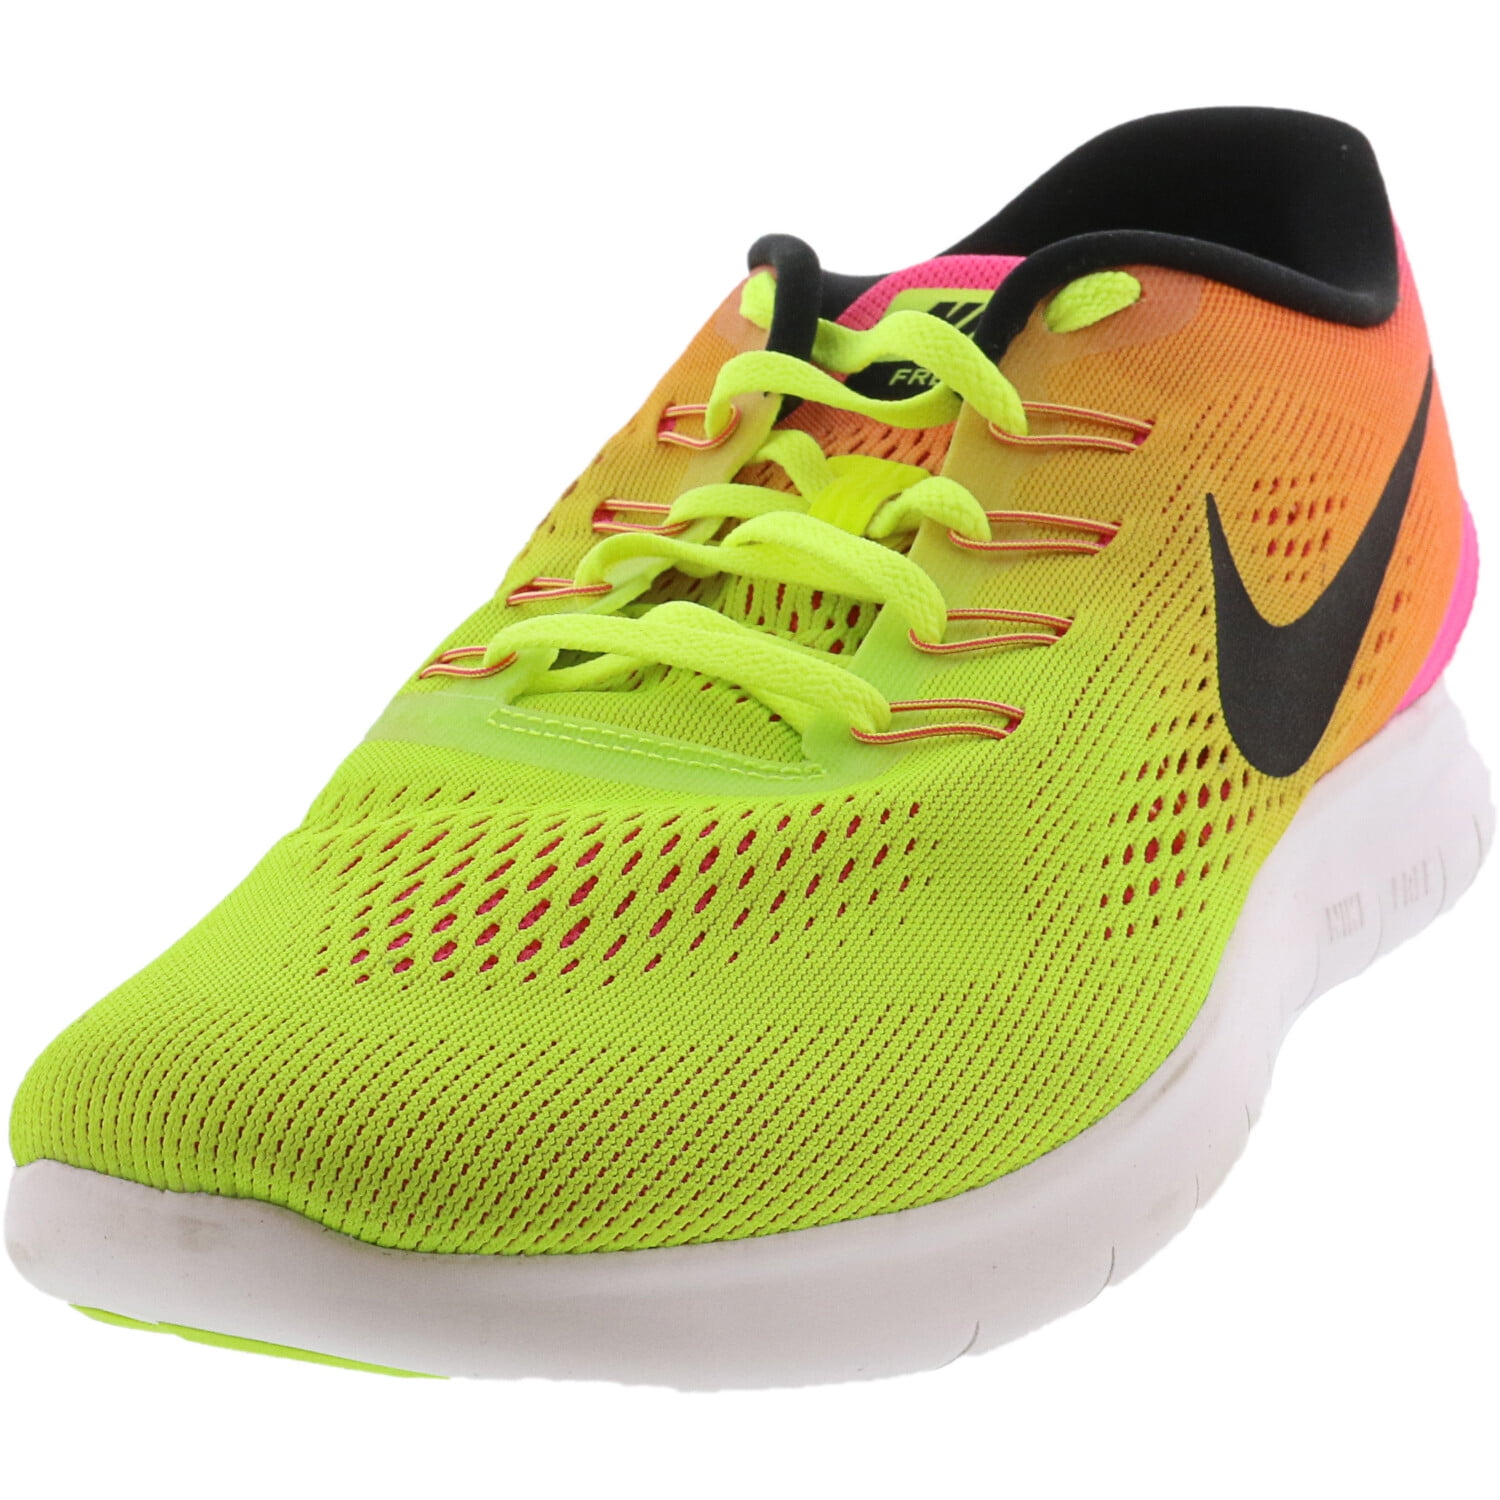 Regulación peine reporte Nike Free Run OC Multi-Color/Multi-Color Olympic 844629-999 Men's Size 12 -  Walmart.com